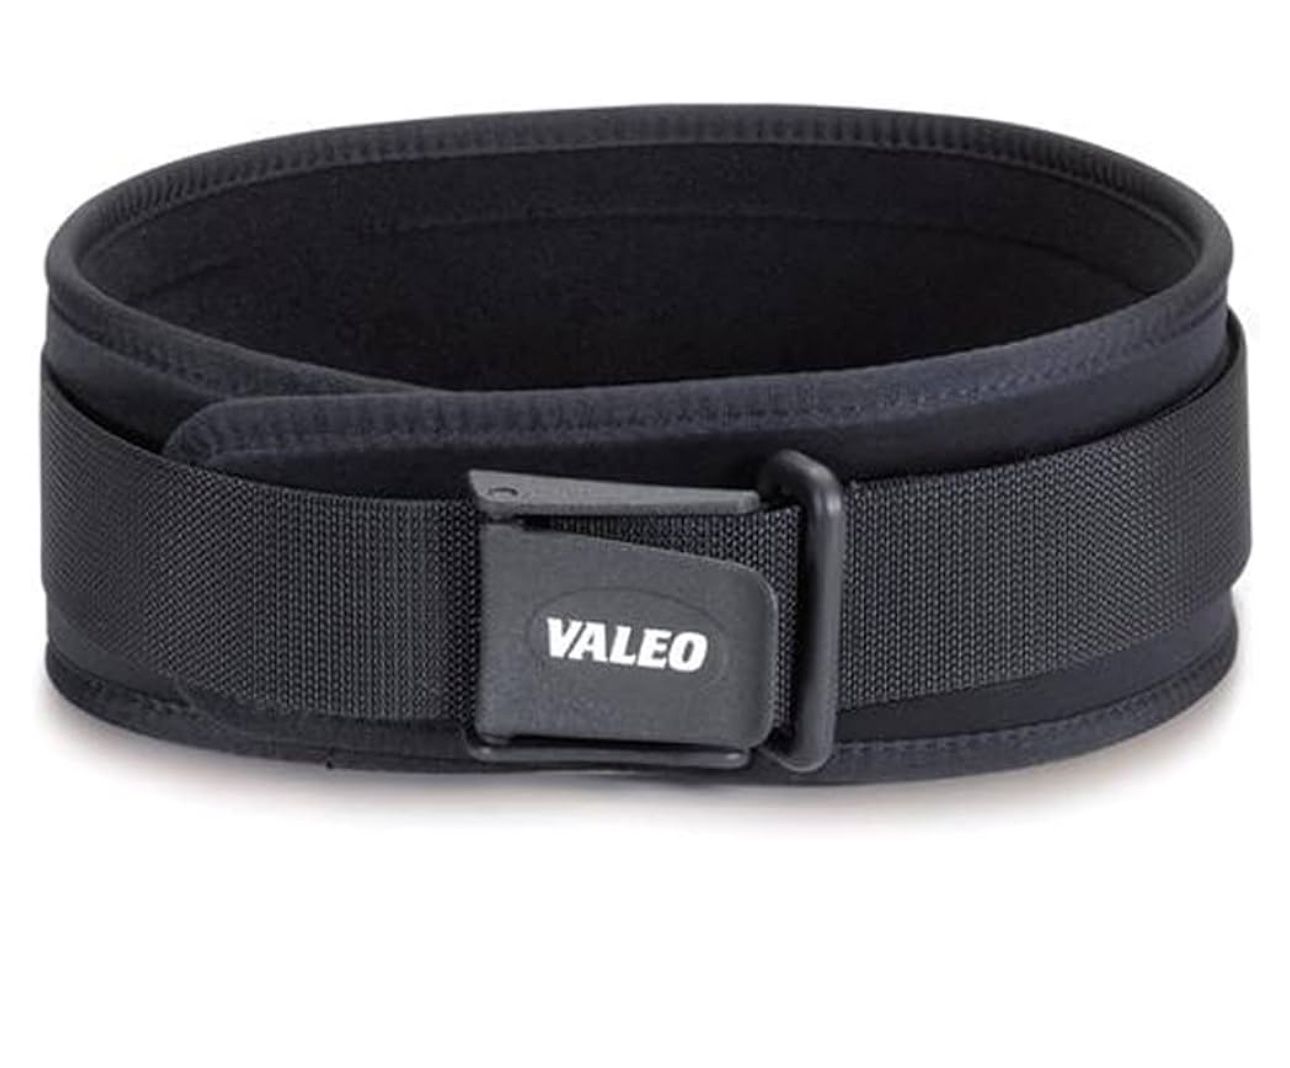 Valeo XL Weight Lifting Belt